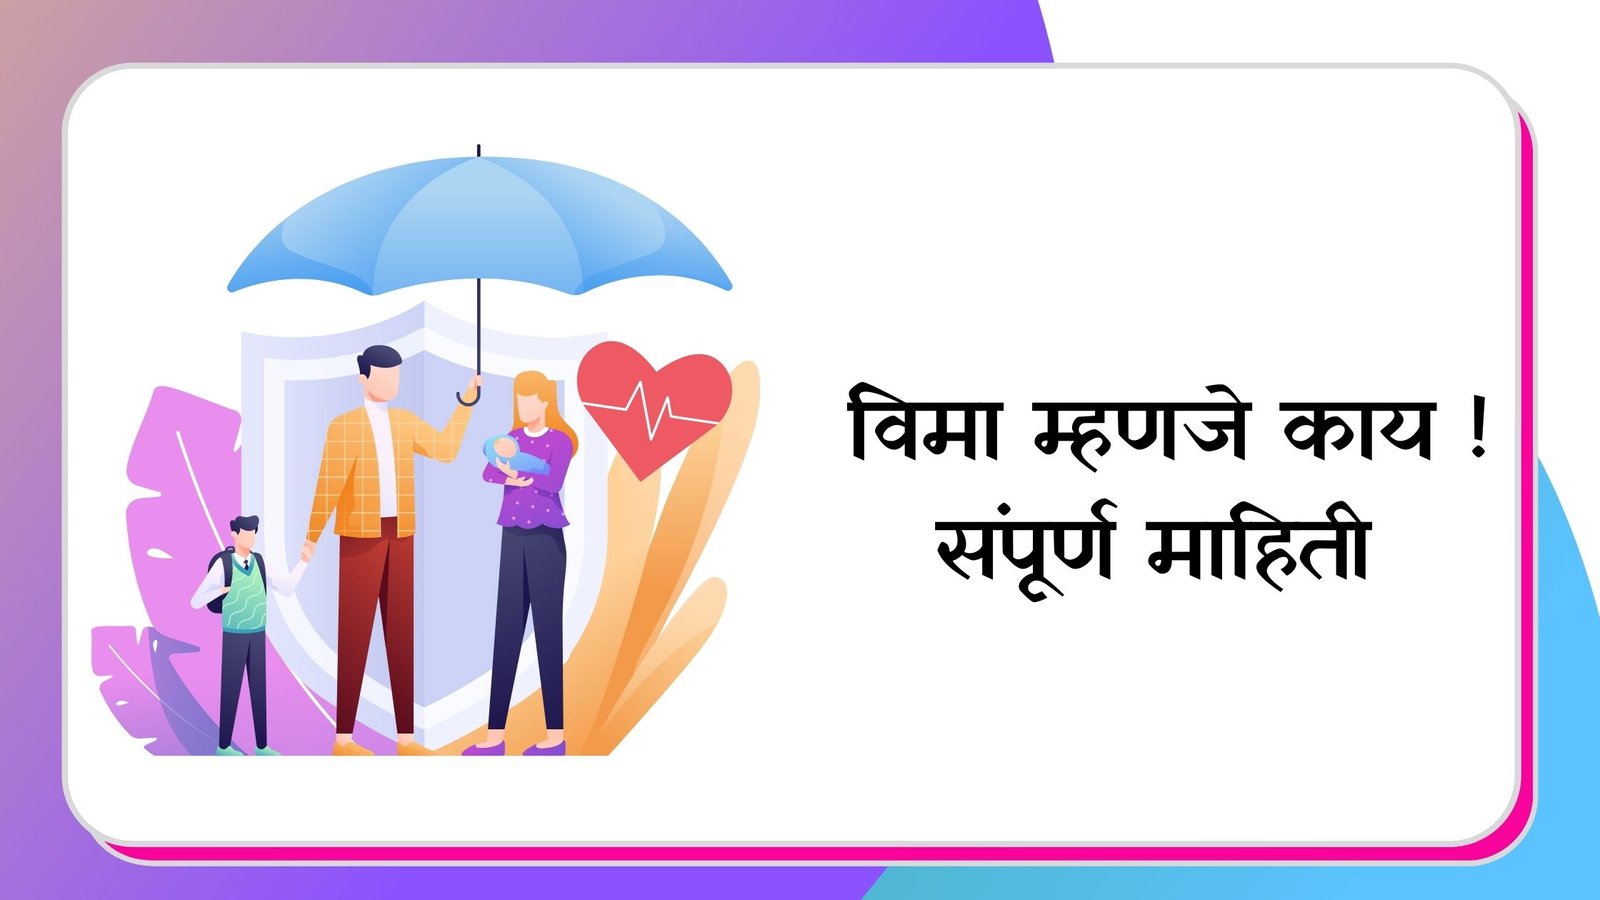 Insurance Information in Marathi